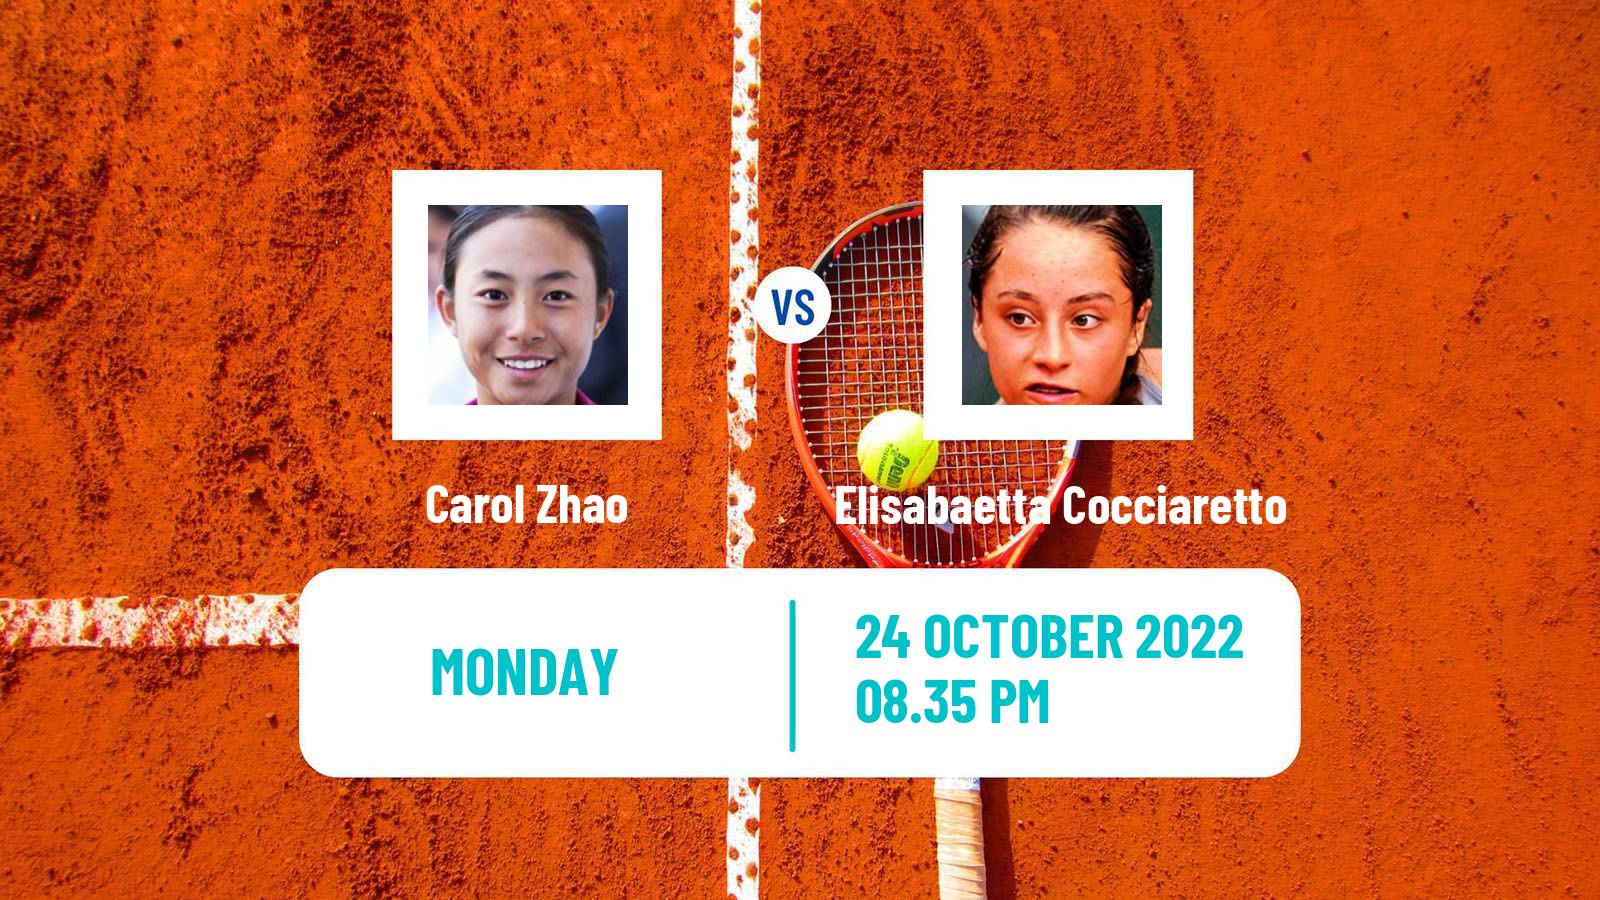 Tennis ATP Challenger Carol Zhao - Elisabaetta Cocciaretto